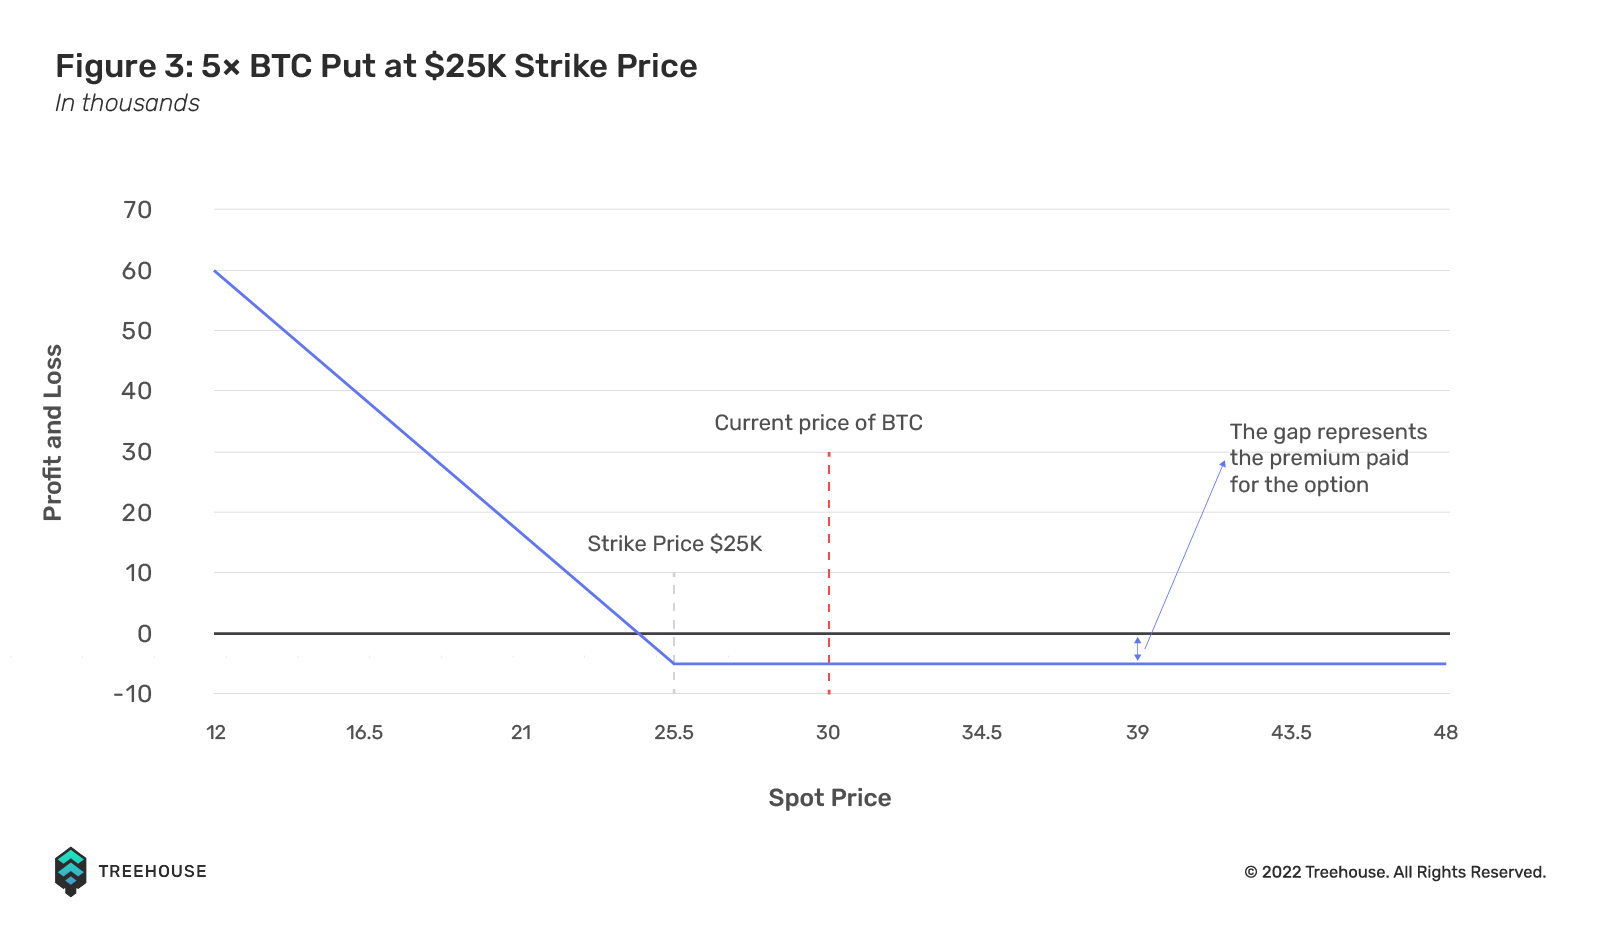 5x BTC Put at $25K Strike Price